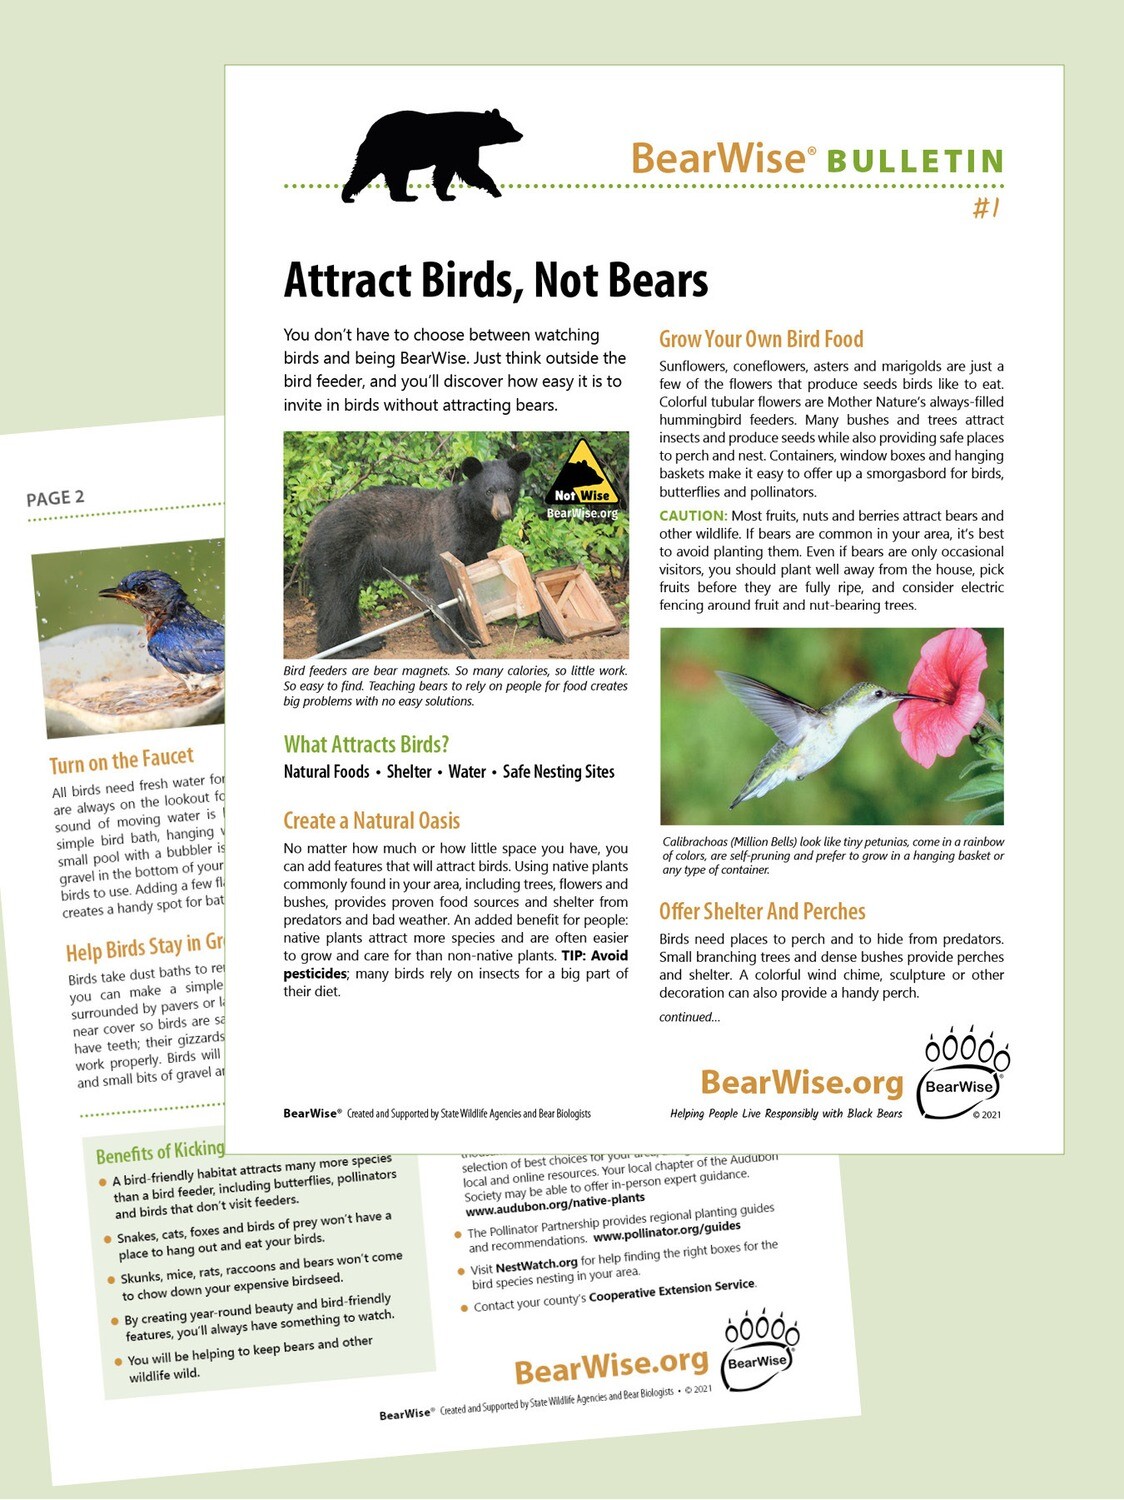 BearWise Bulletin #1: Attract Birds, Not Bears (PDF download)